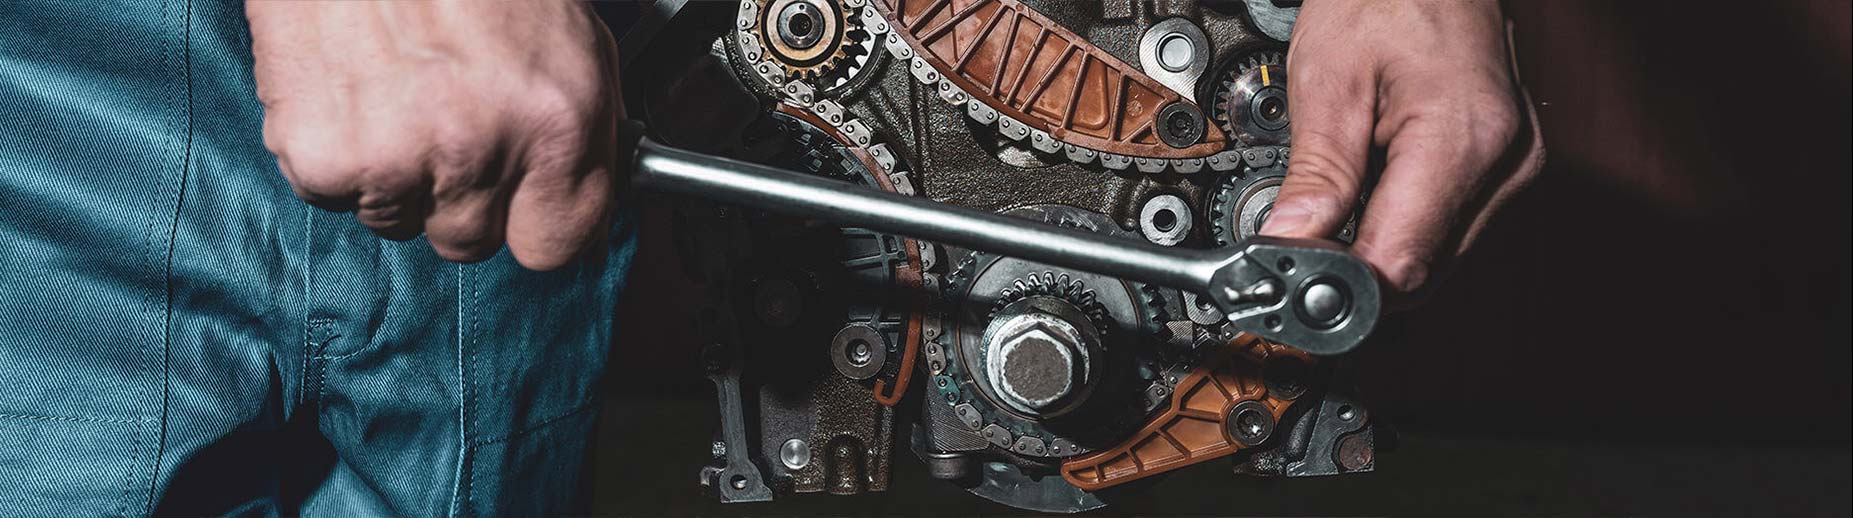 Victoria Auto Repair, Transmission Repair and Brake Service